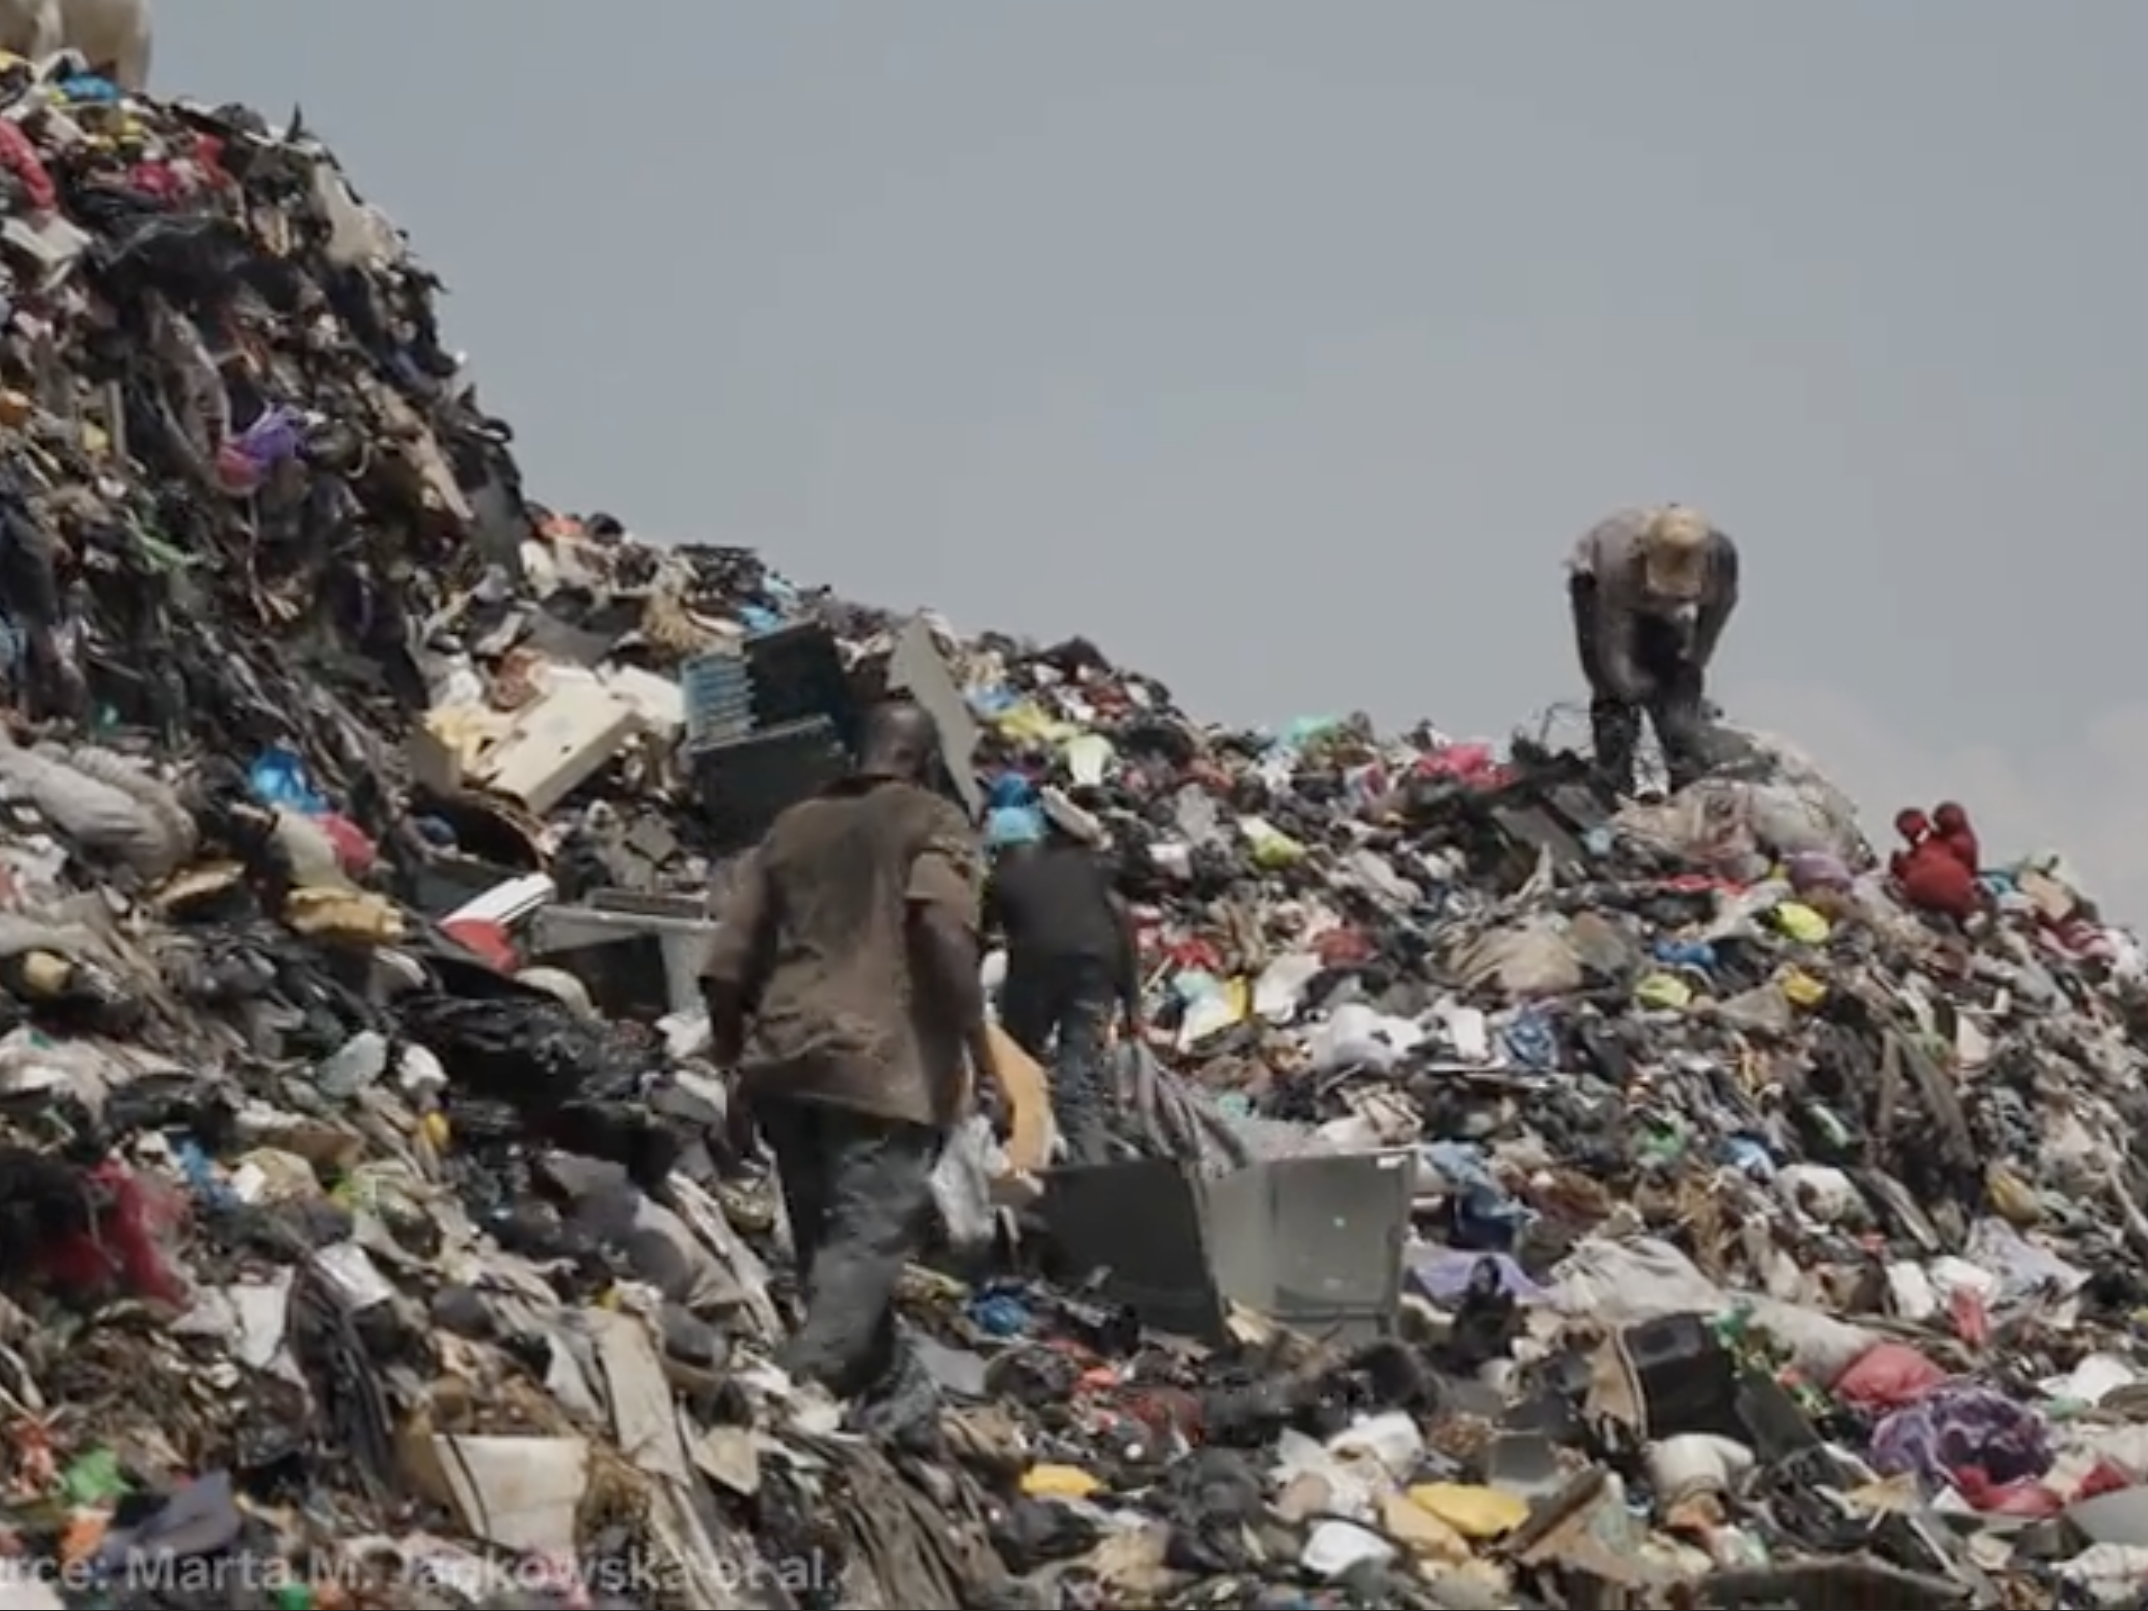 Landfills of clothing in Accra Ghana